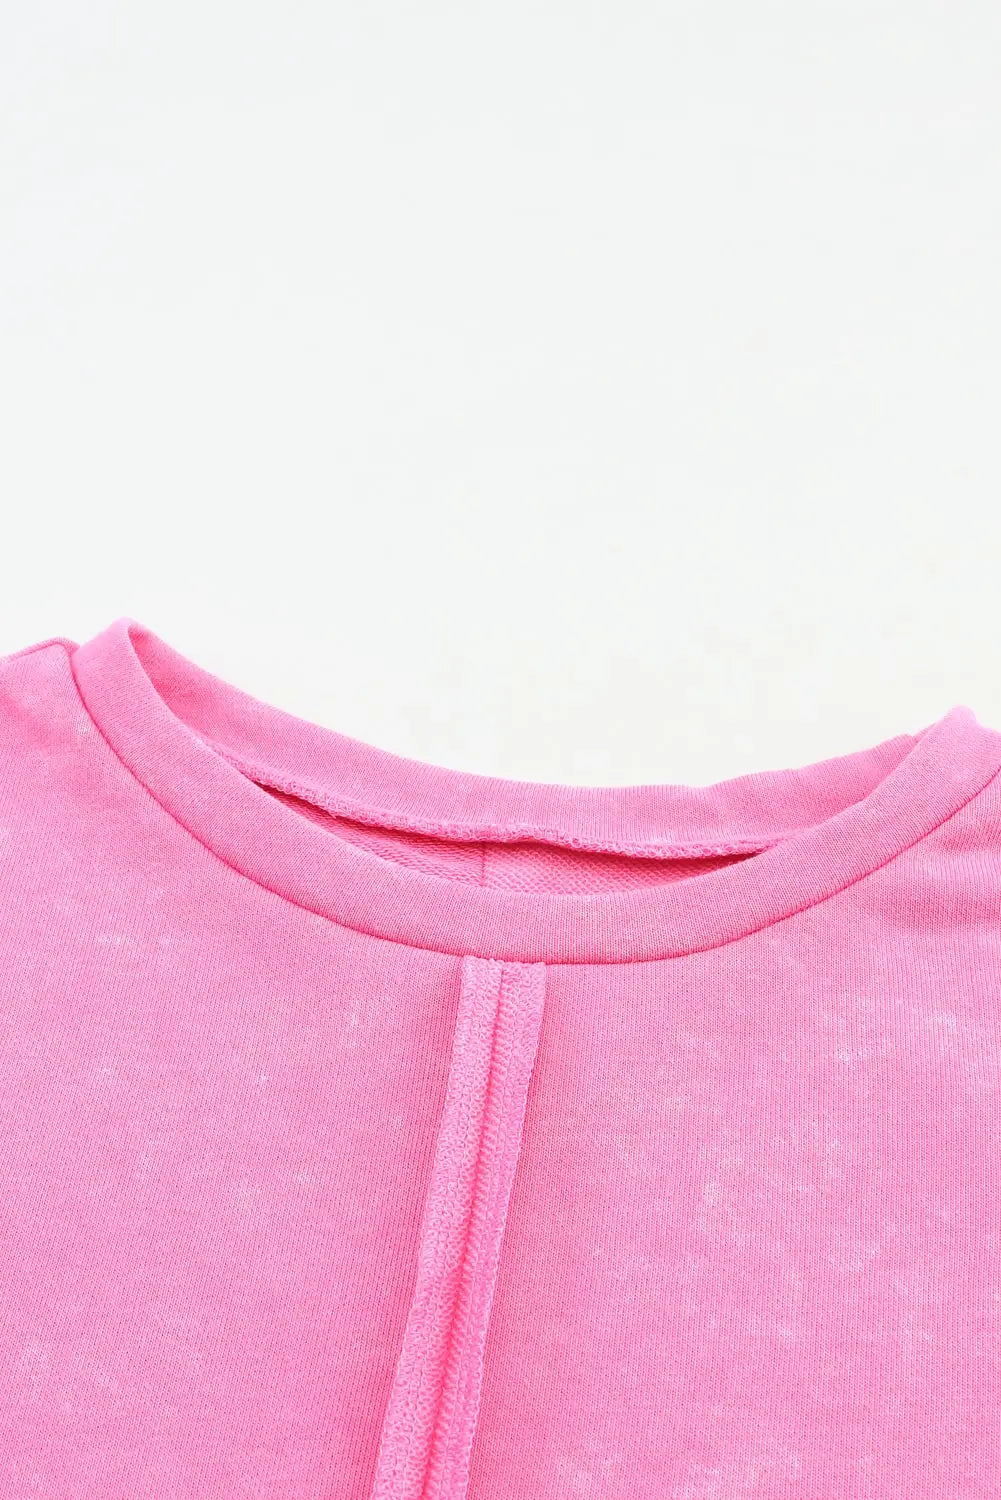 Rose exposed seamed high low raw edge sweatshirt - tops